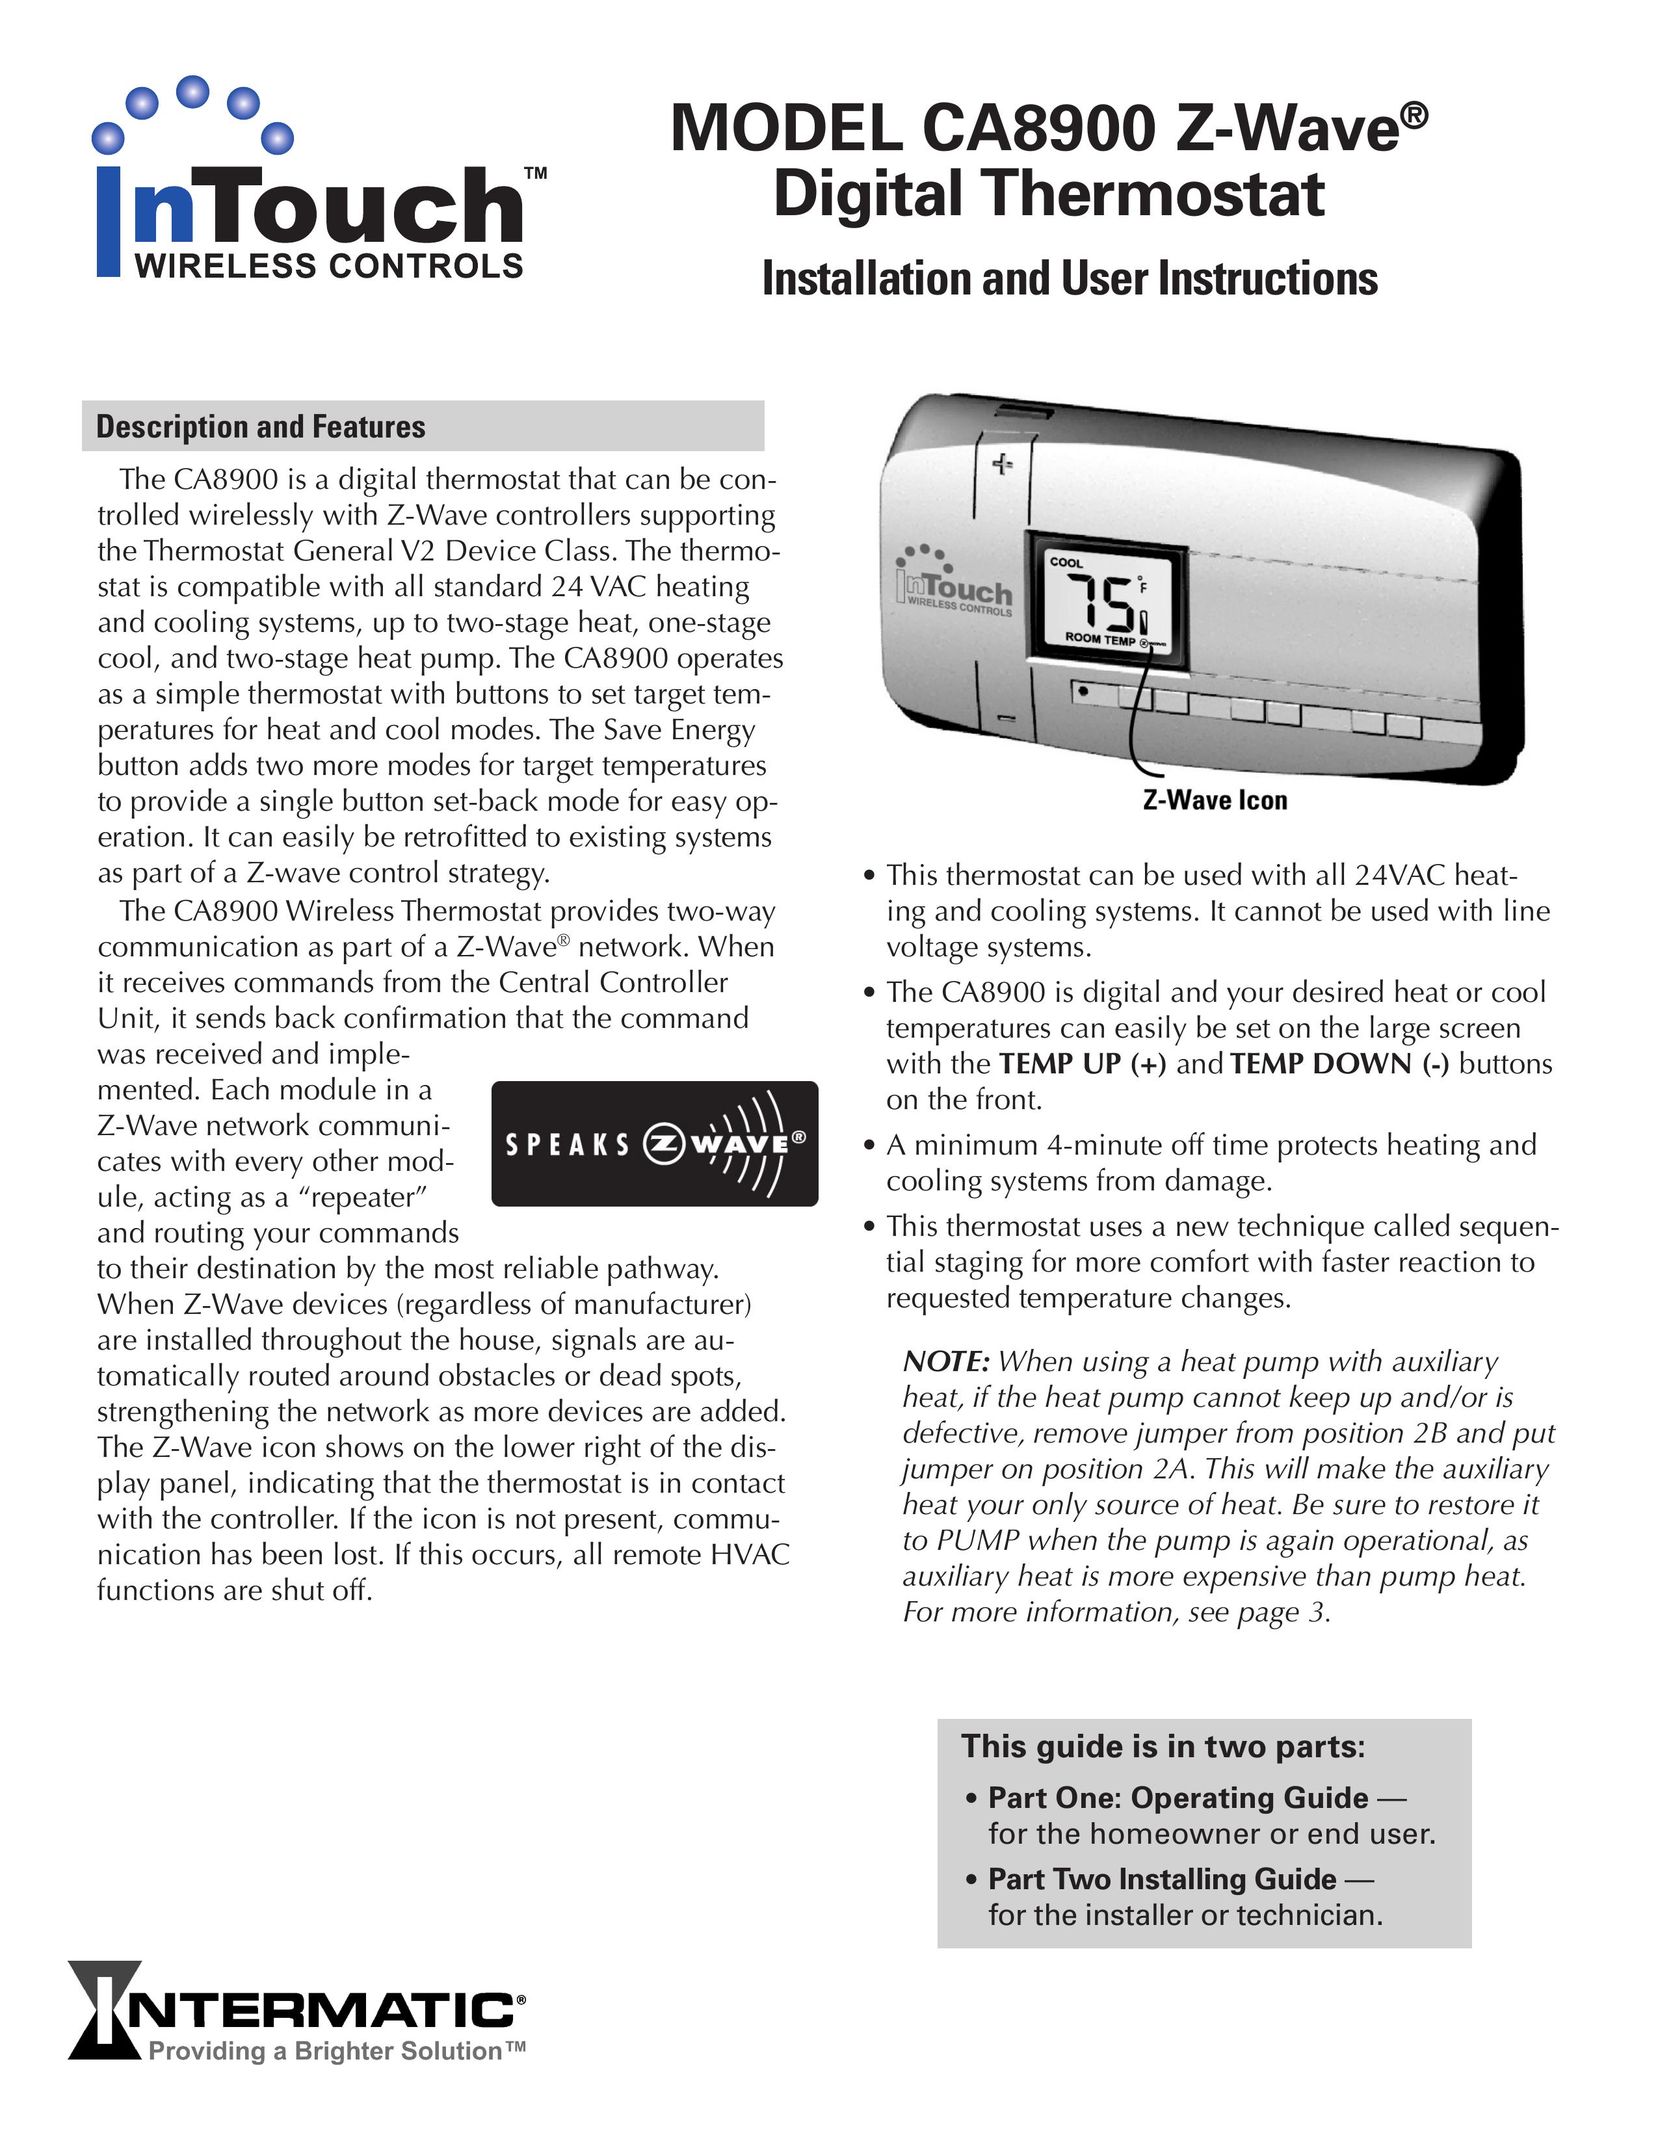 Trane CA8900 Thermostat User Manual